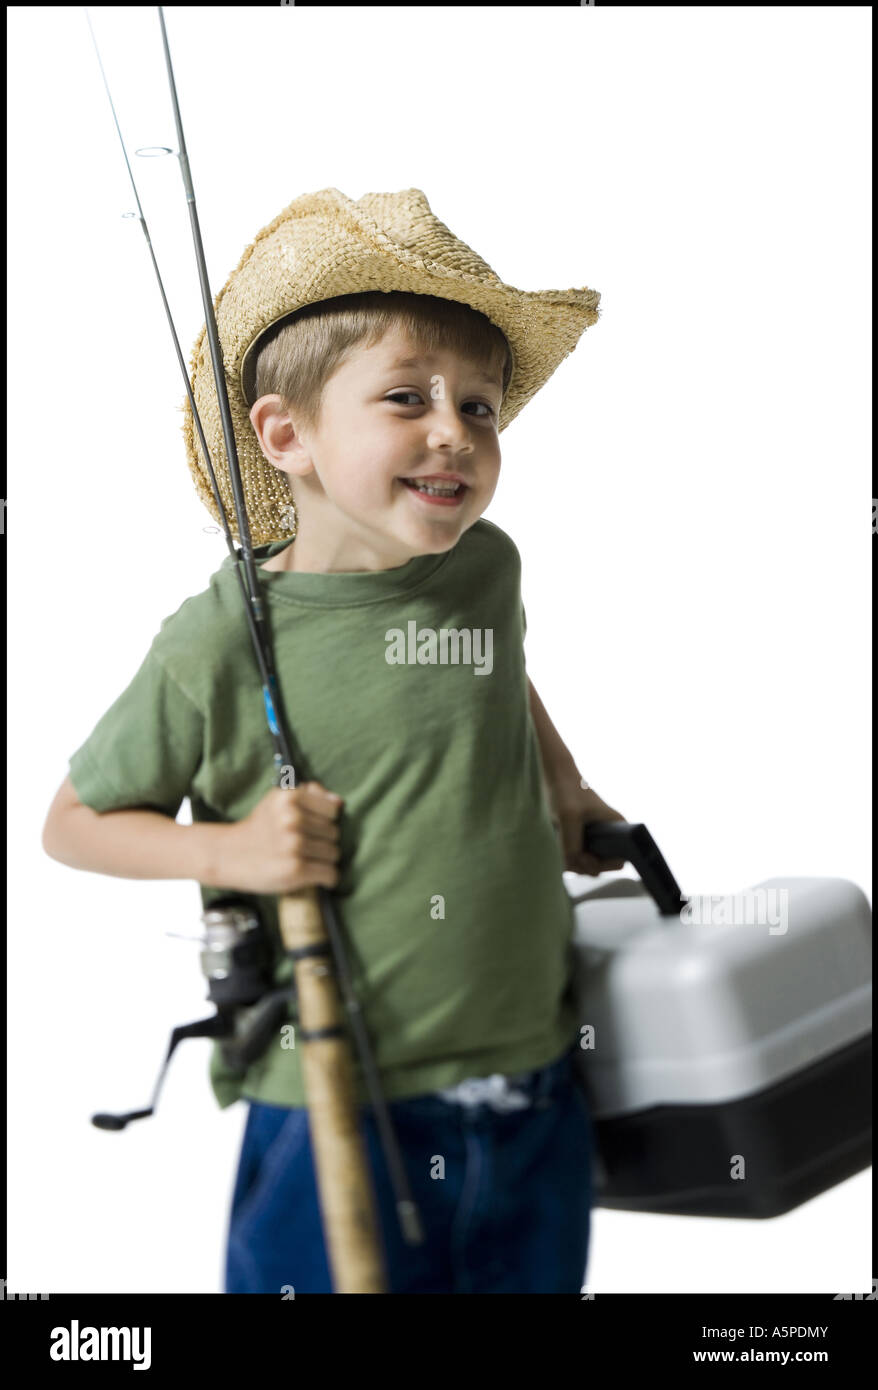 Adorable Baby Boy Toy Fishing Pole Stock Photo 186854507